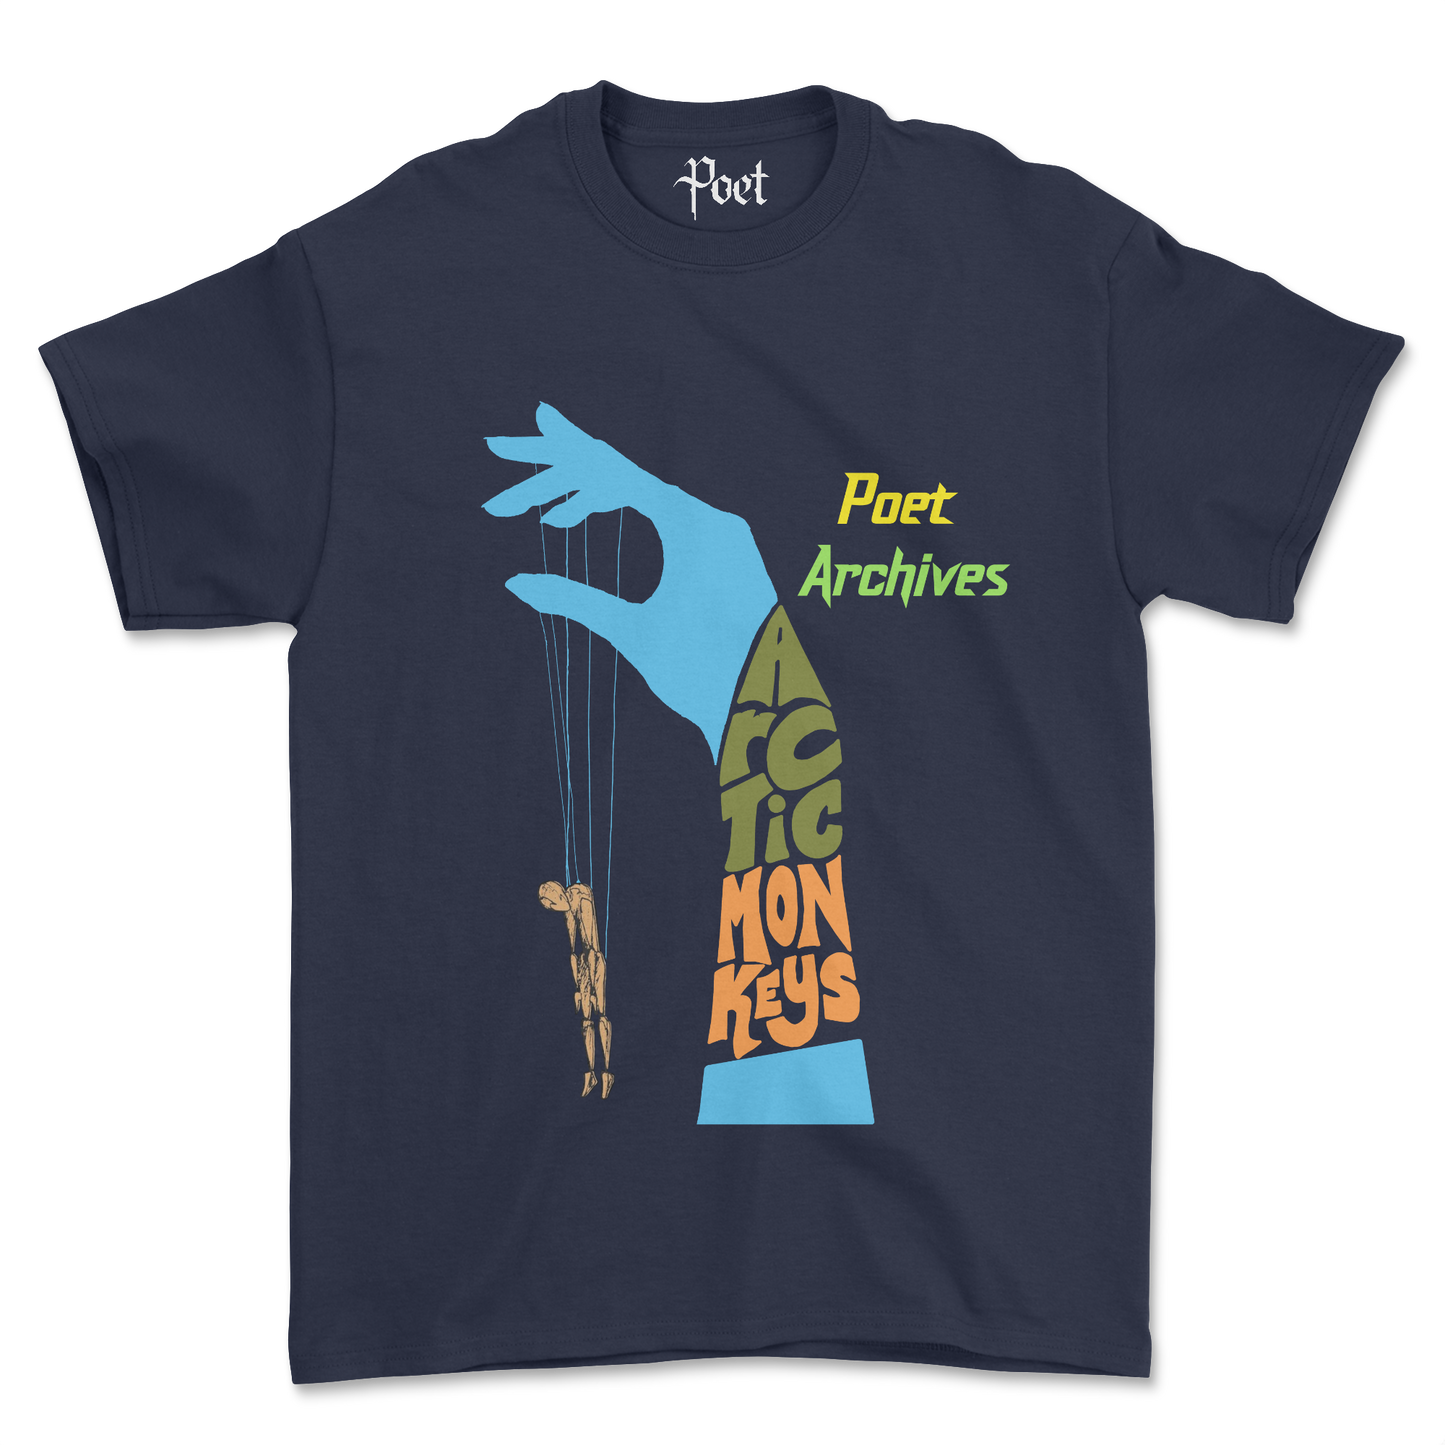 Arctic Monkeys T-Shirt - Poet Archives